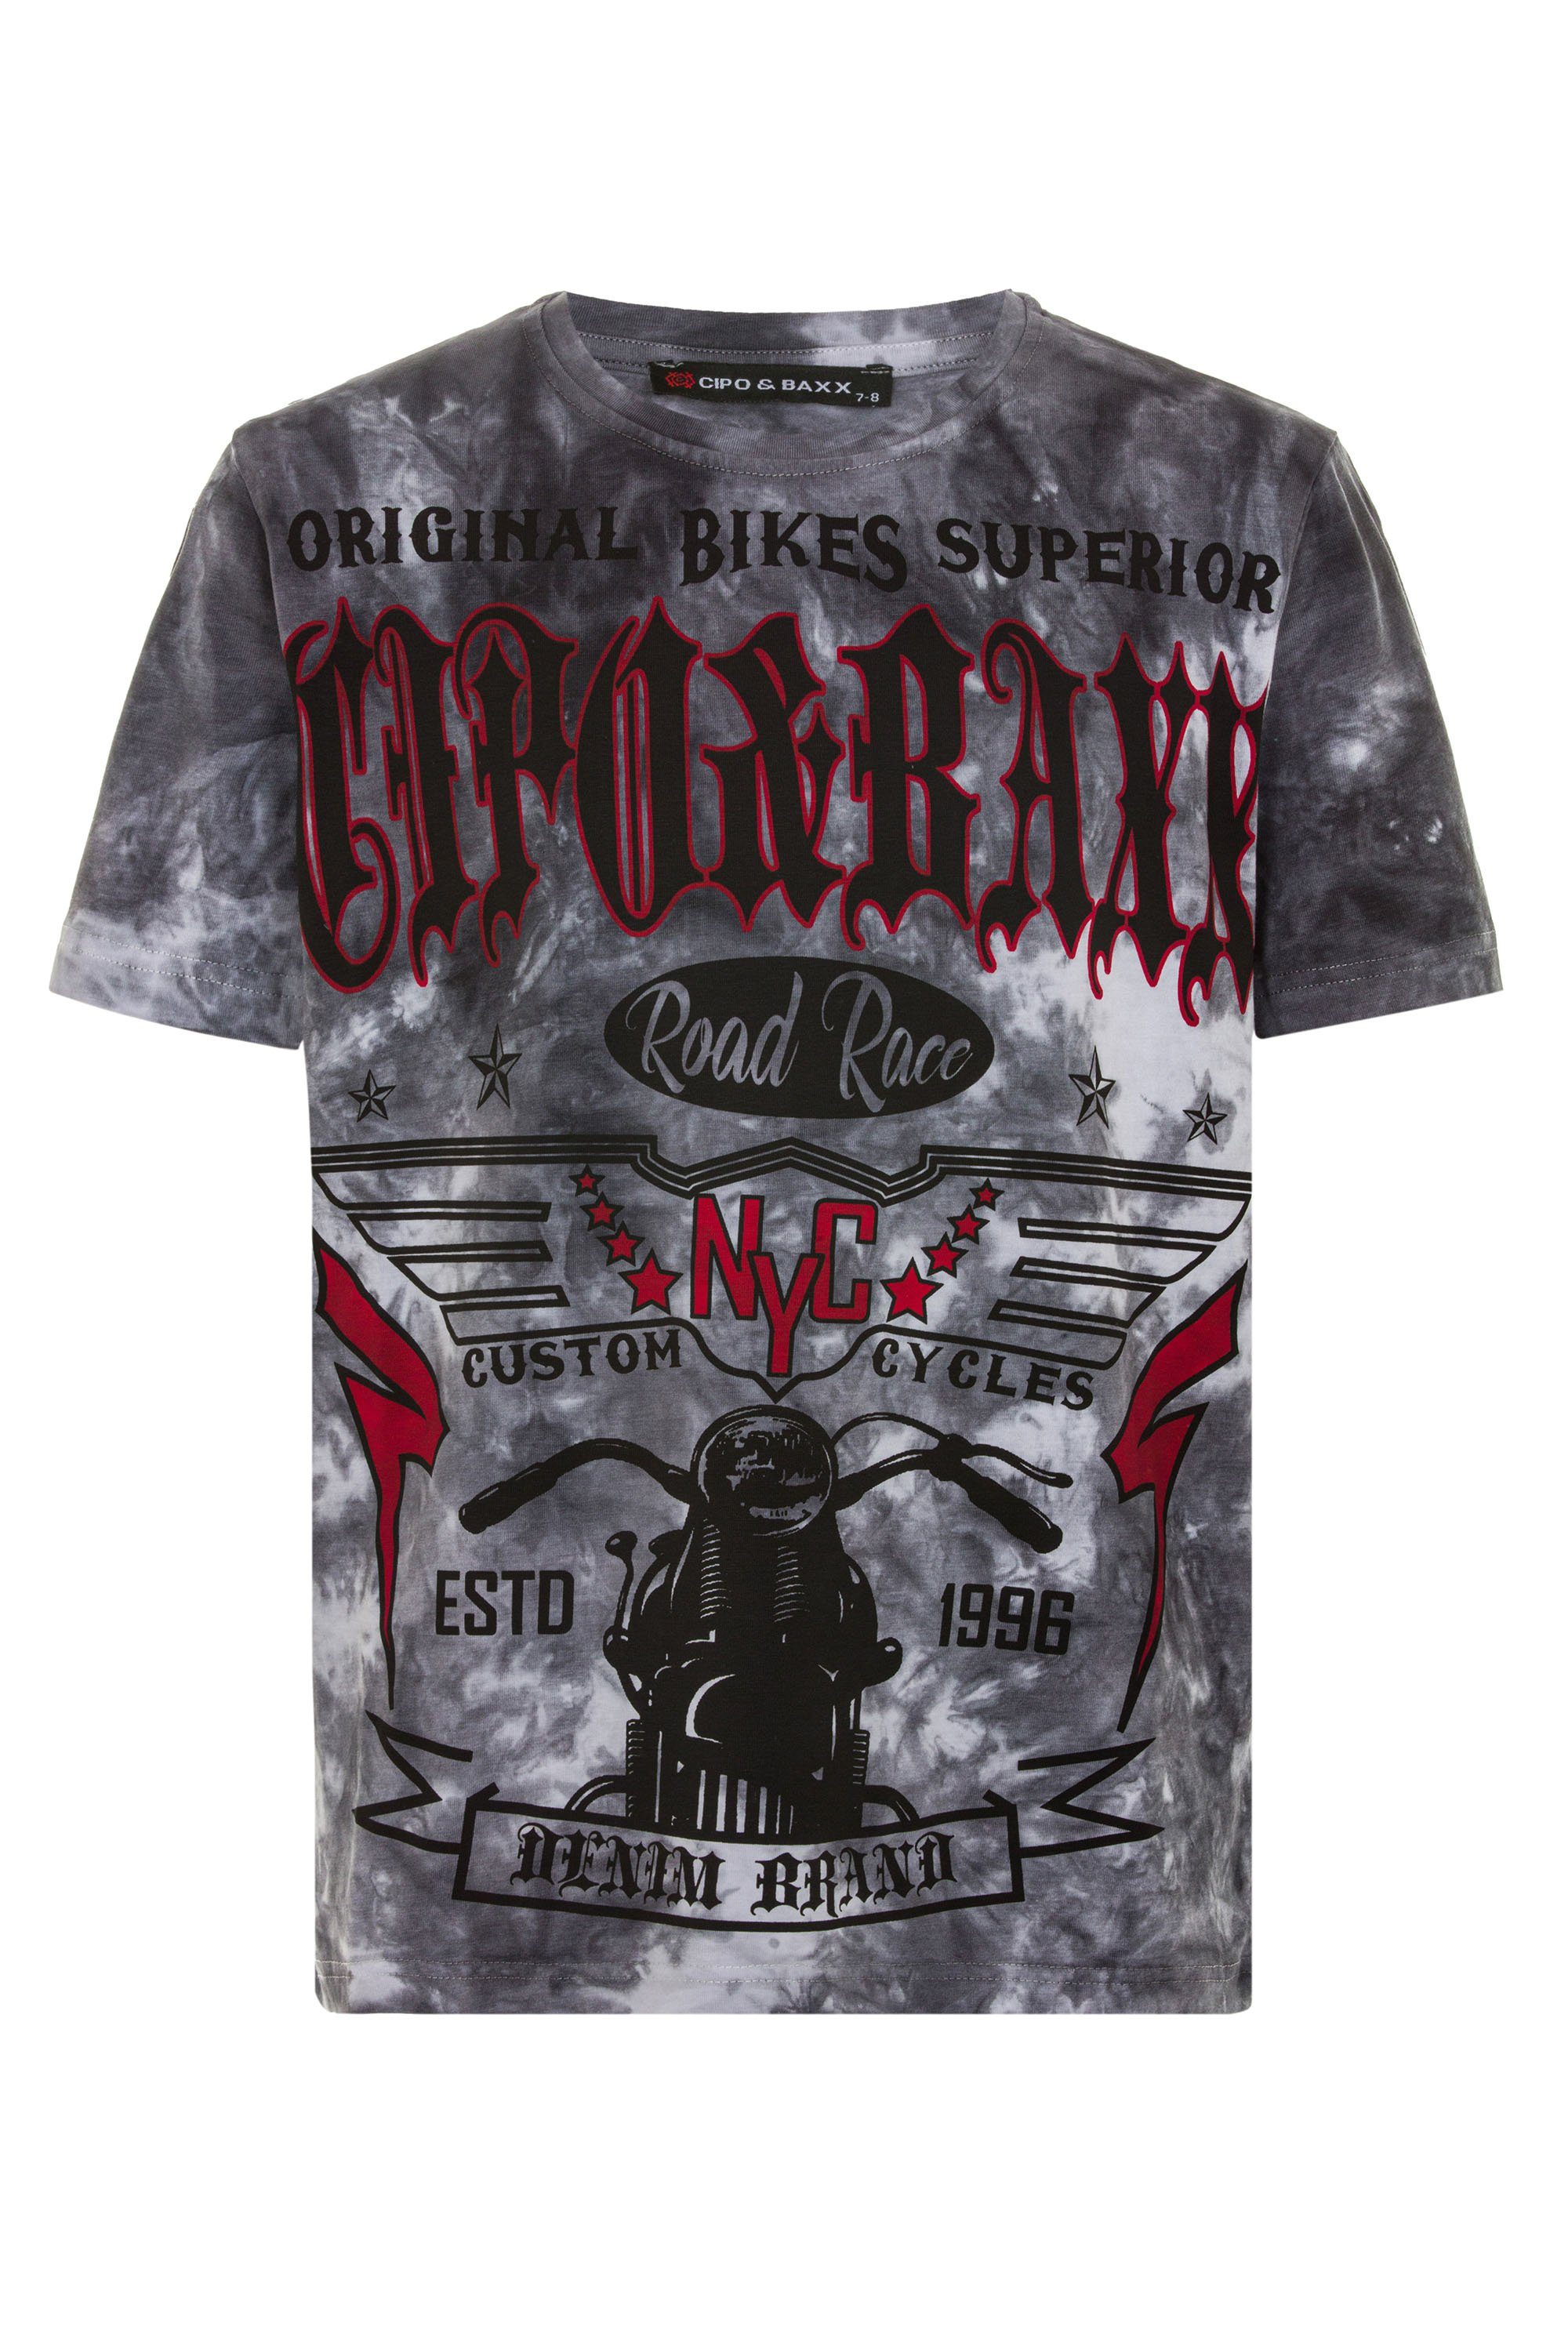 coolem T-Shirt Baxx & grau-grau Motorrad-Print mit Cipo